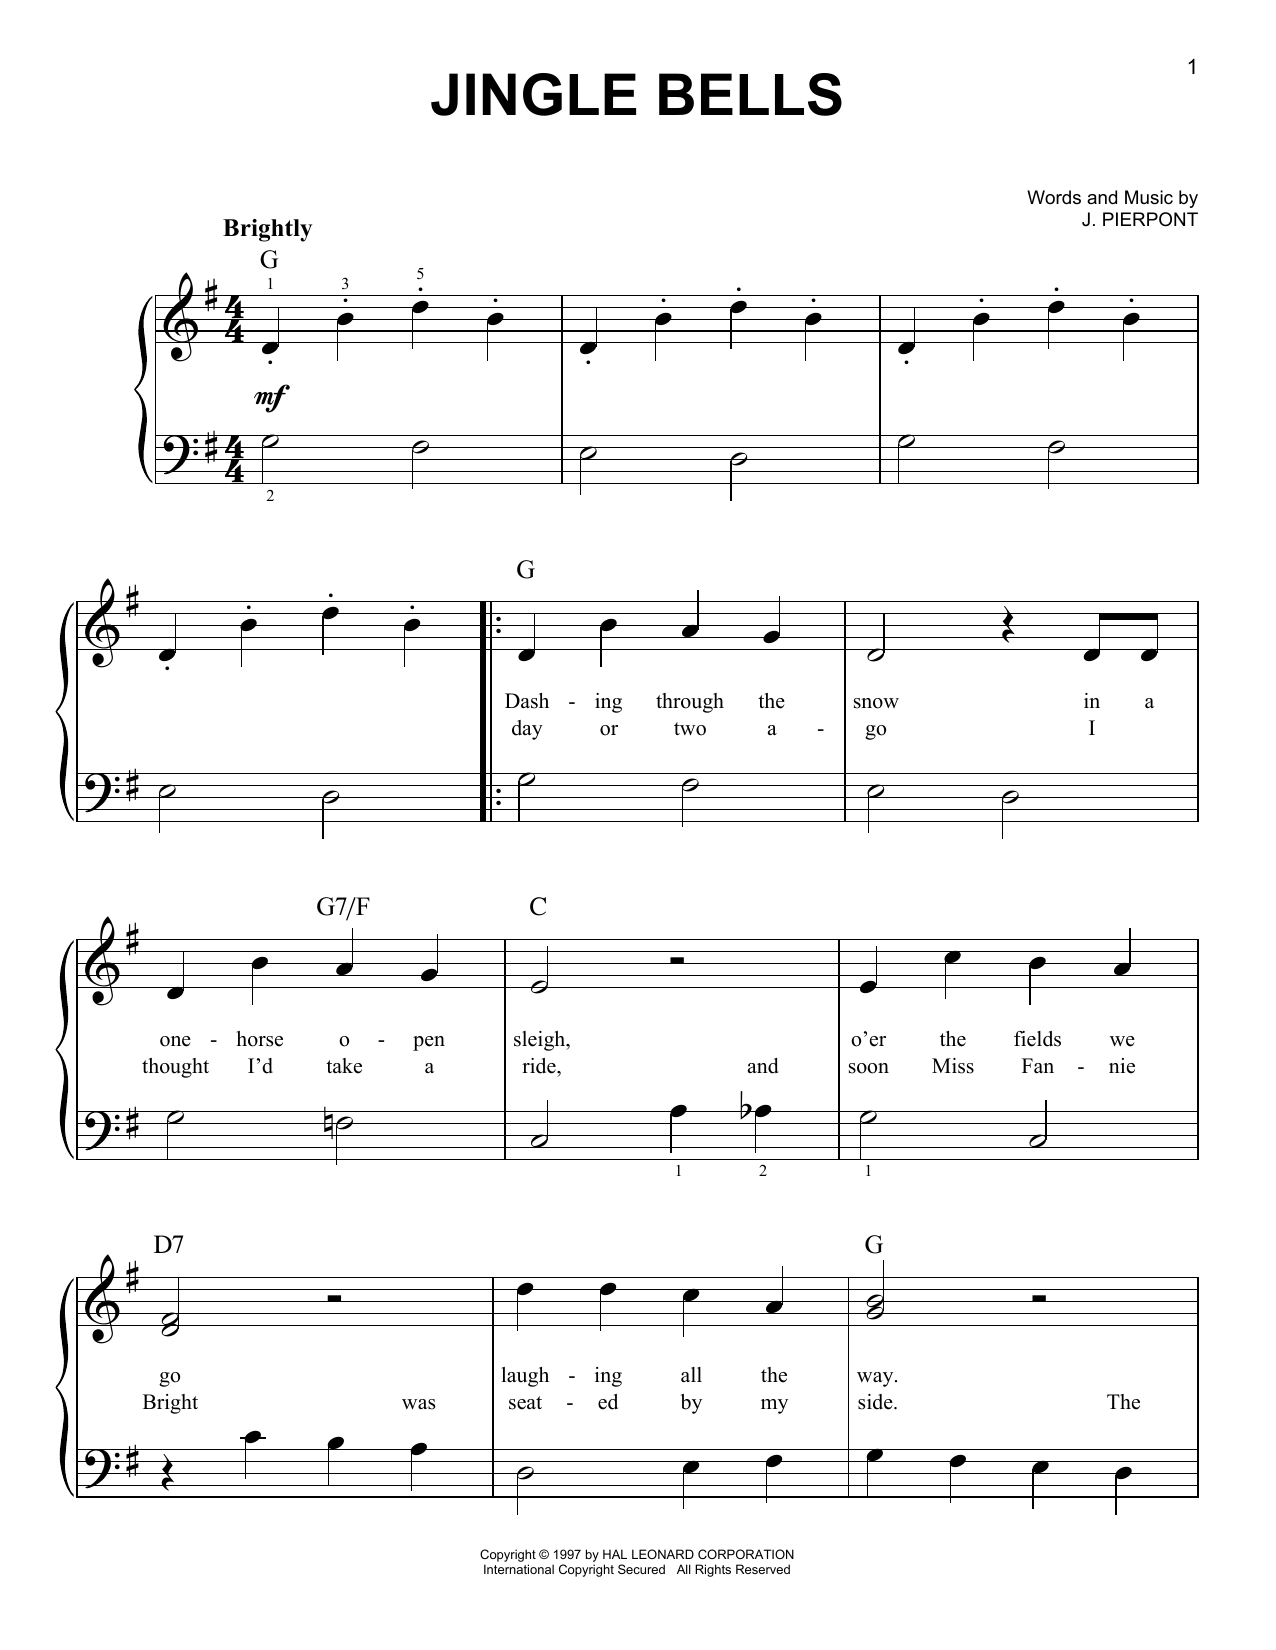 Jingle Bells Sheet Music By J Pierpont For Piano Keyboard Noteflight Marketplace